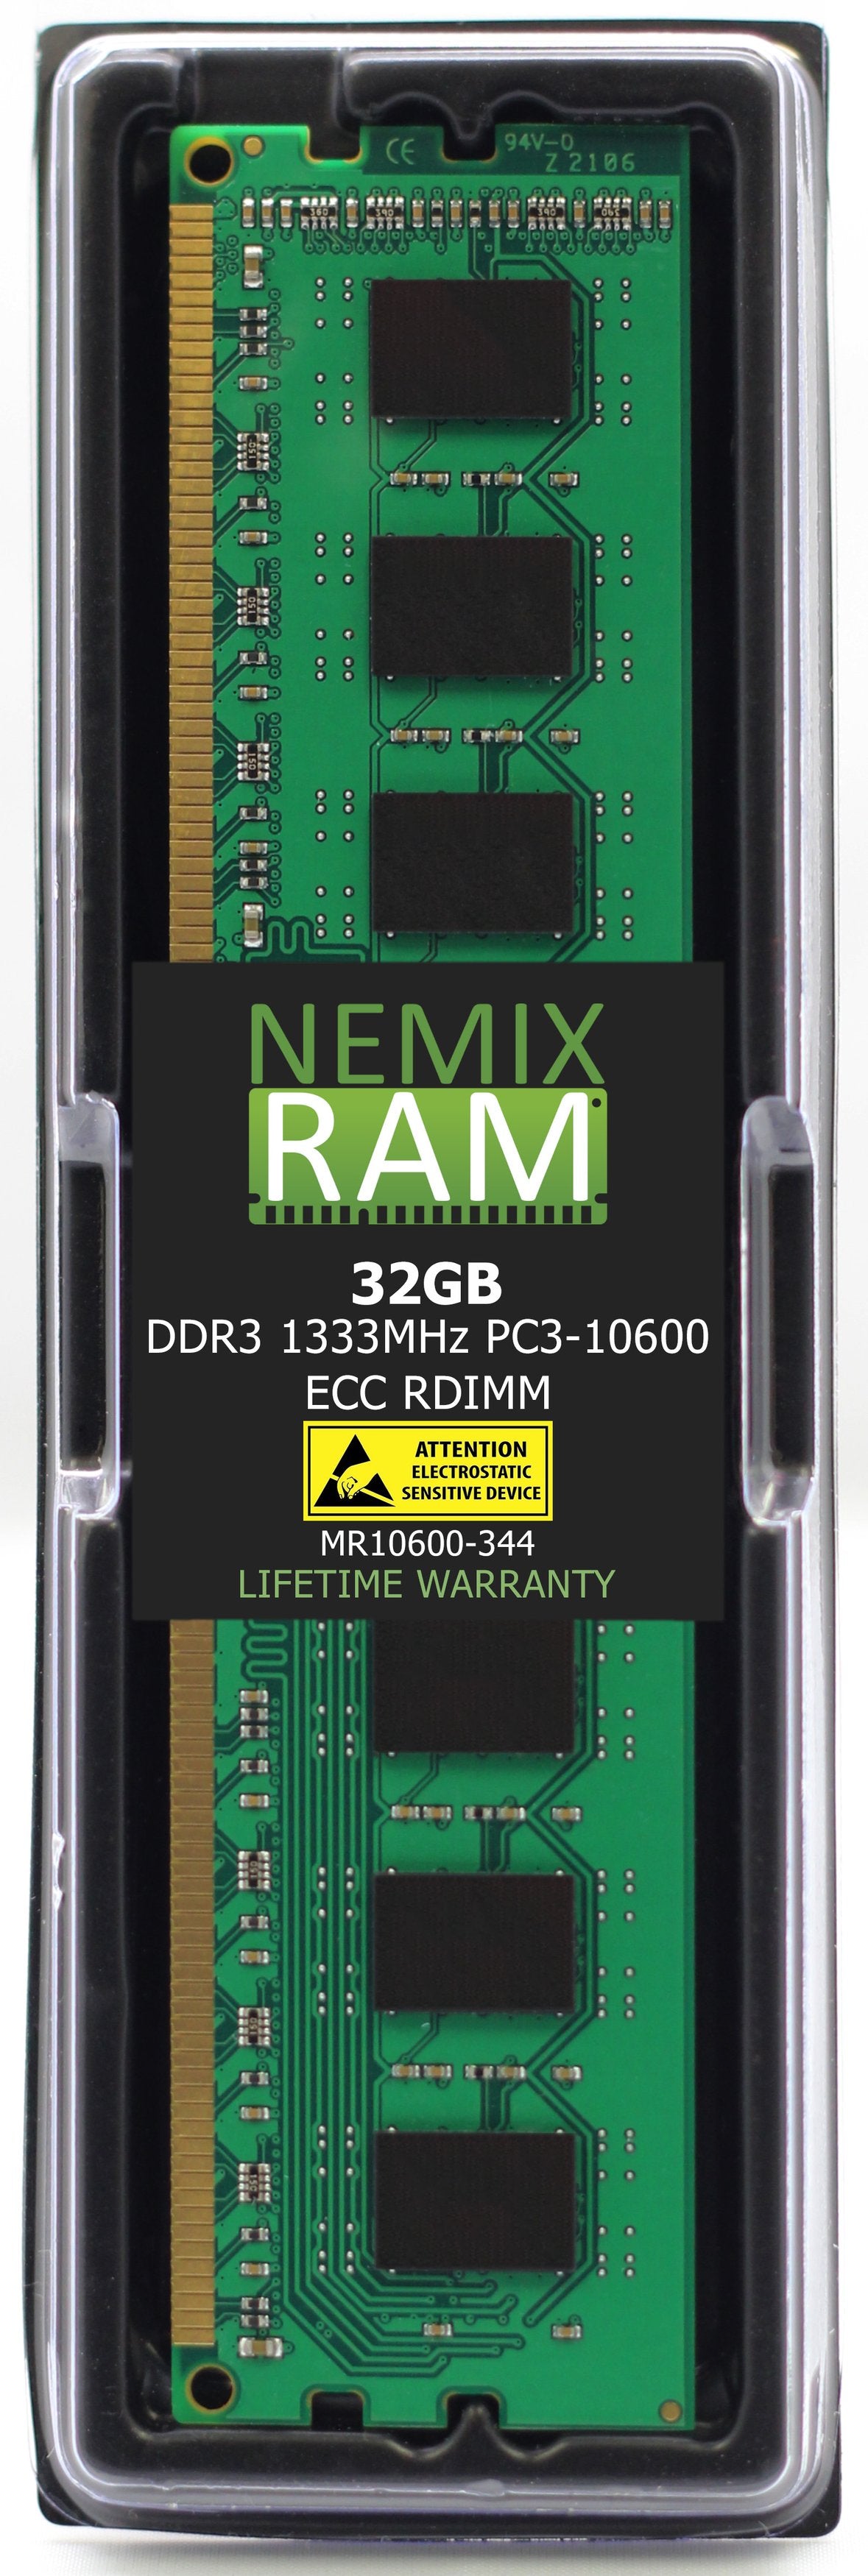 Hynix HMT84GR7AMR4C-H9 32GB DDR3 1333MHZ PC3-10600 RDIMM Compatible Memory Module